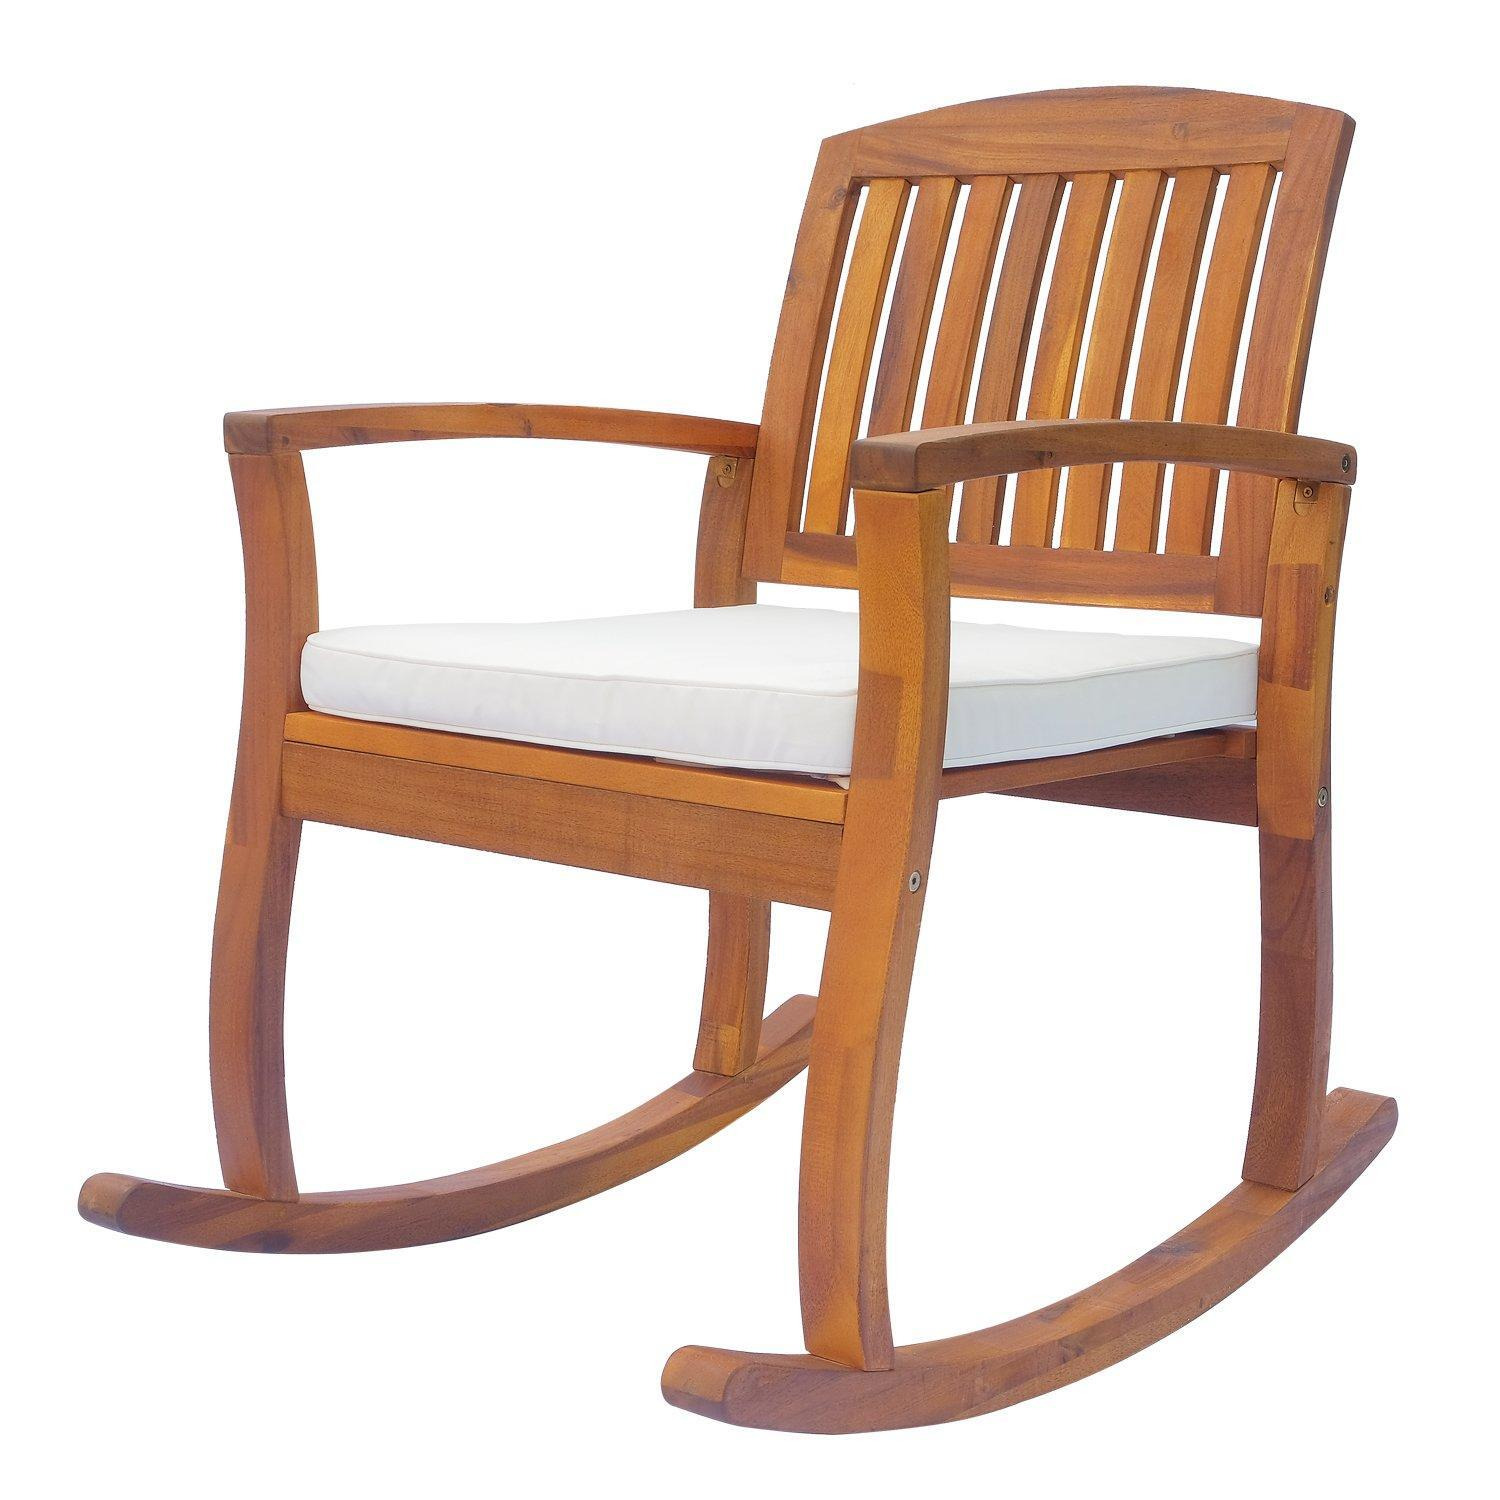 Rocking Chair Porch Slat Cushion Acacia Hardwood Deck Indoor Outdoor - image 1